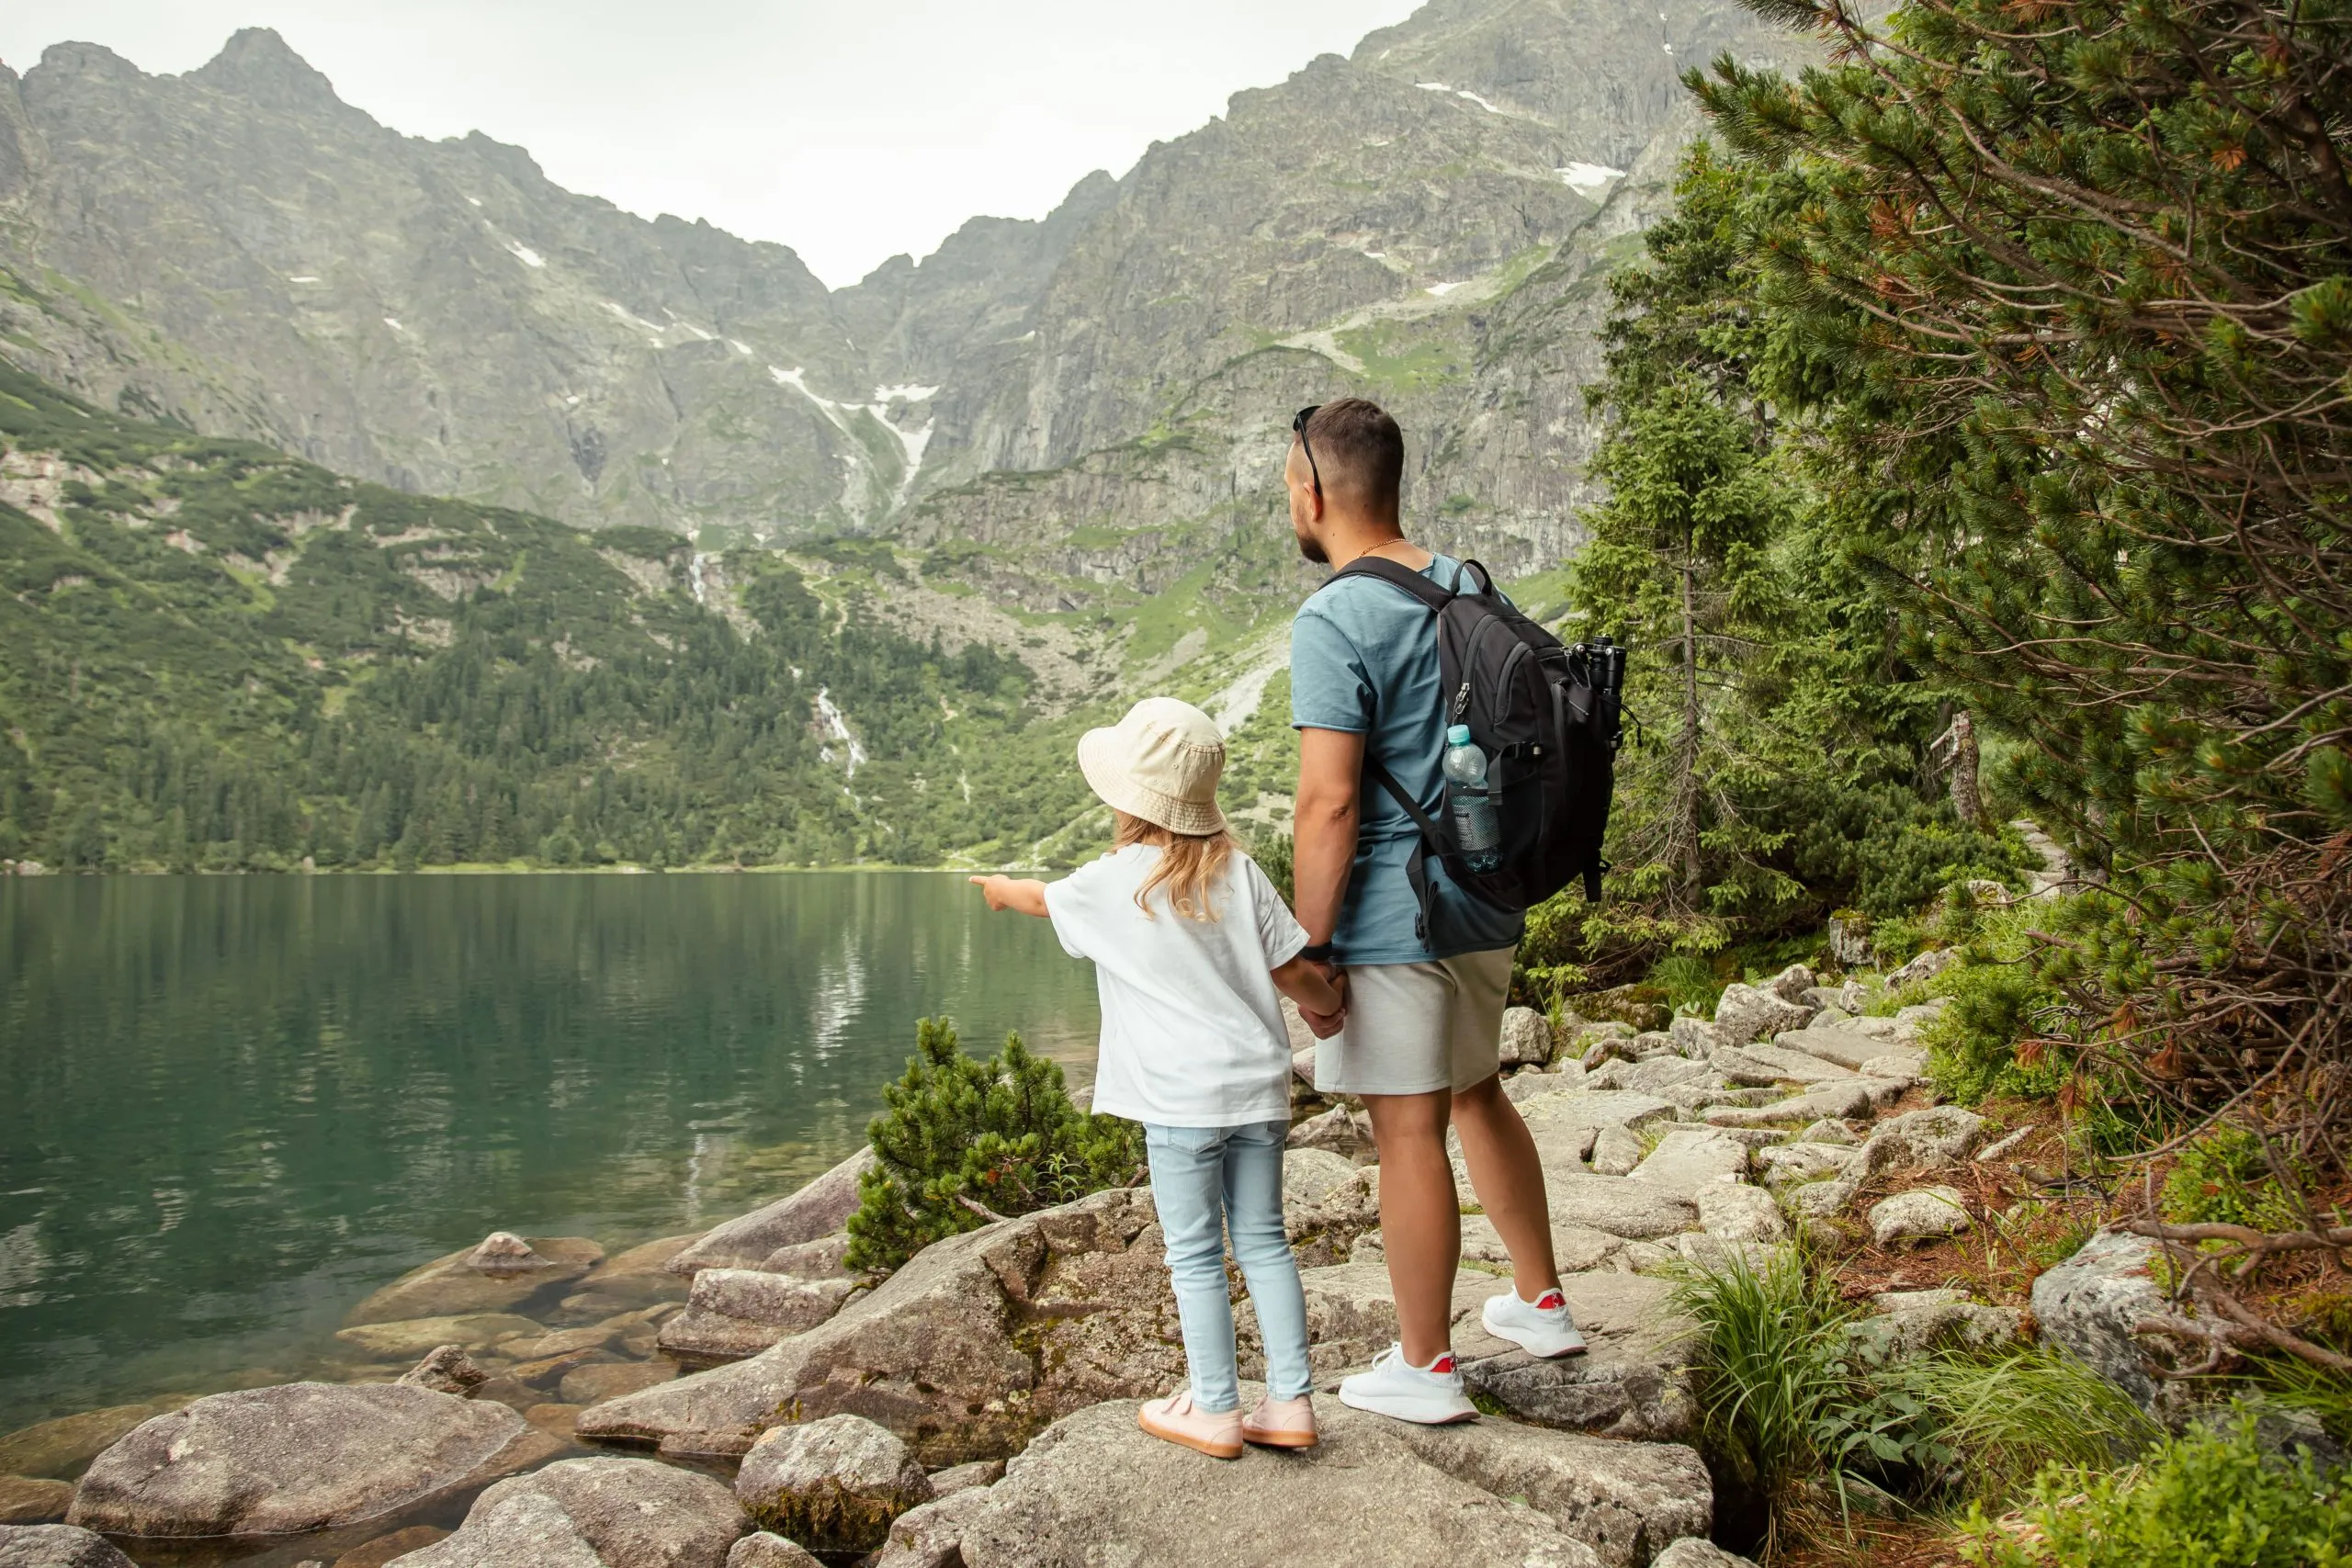 Hombre y niño turistas en las montañas del lago Morskie Oko, cerca de Zakopane, montañas Tatra, Polonia. Concepto de viaje familiar.